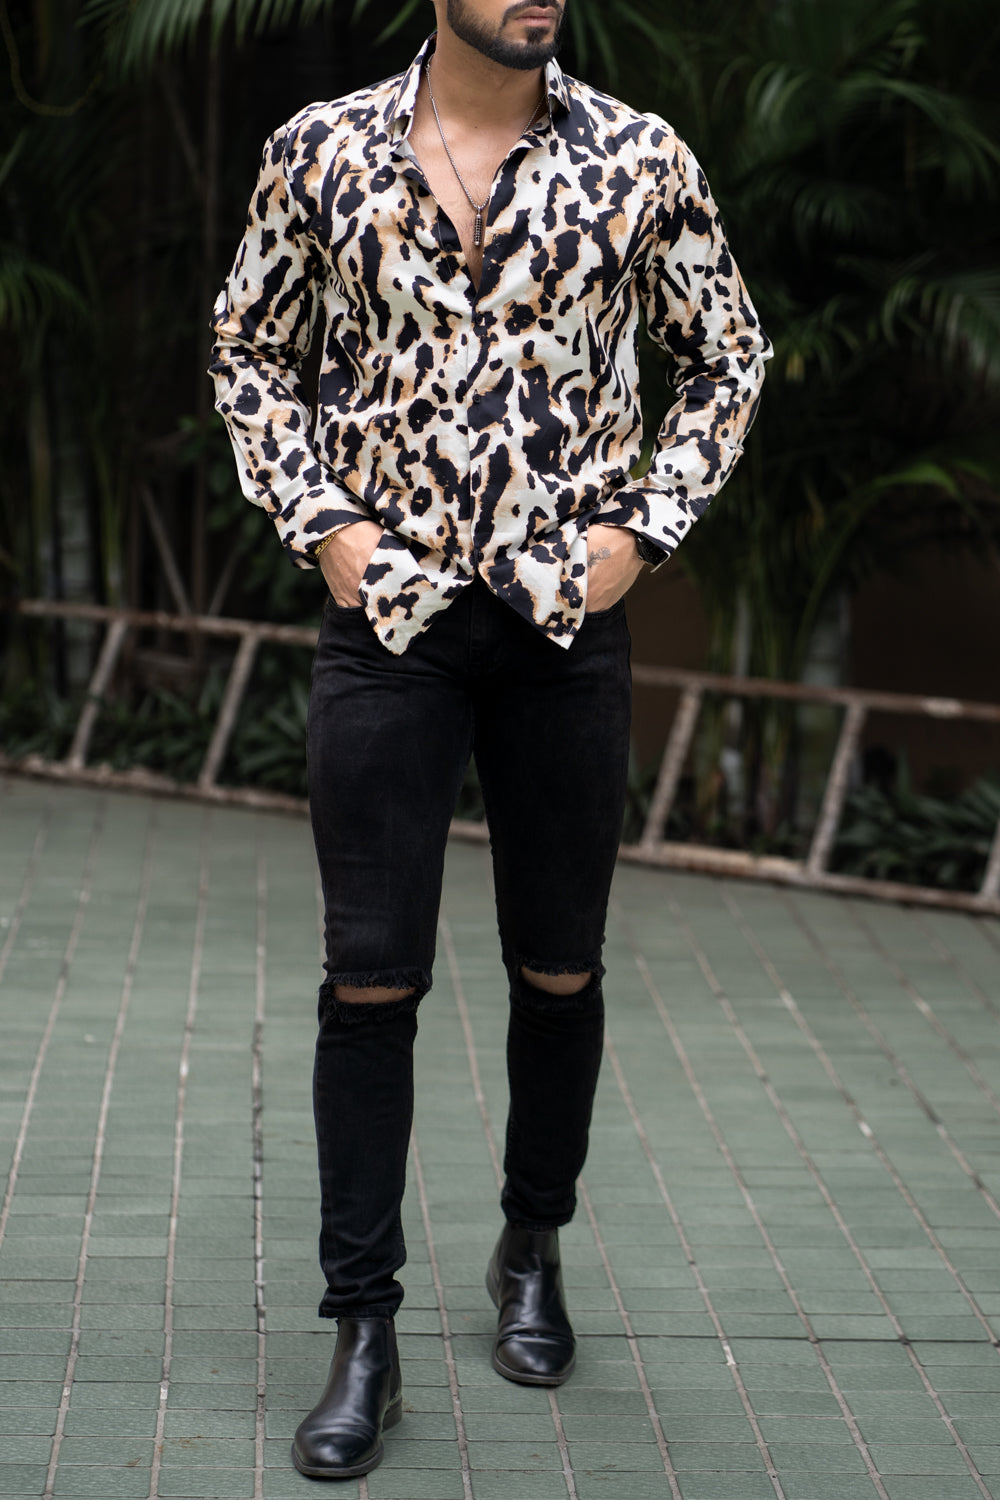 Chic Leopard Printed Shirt